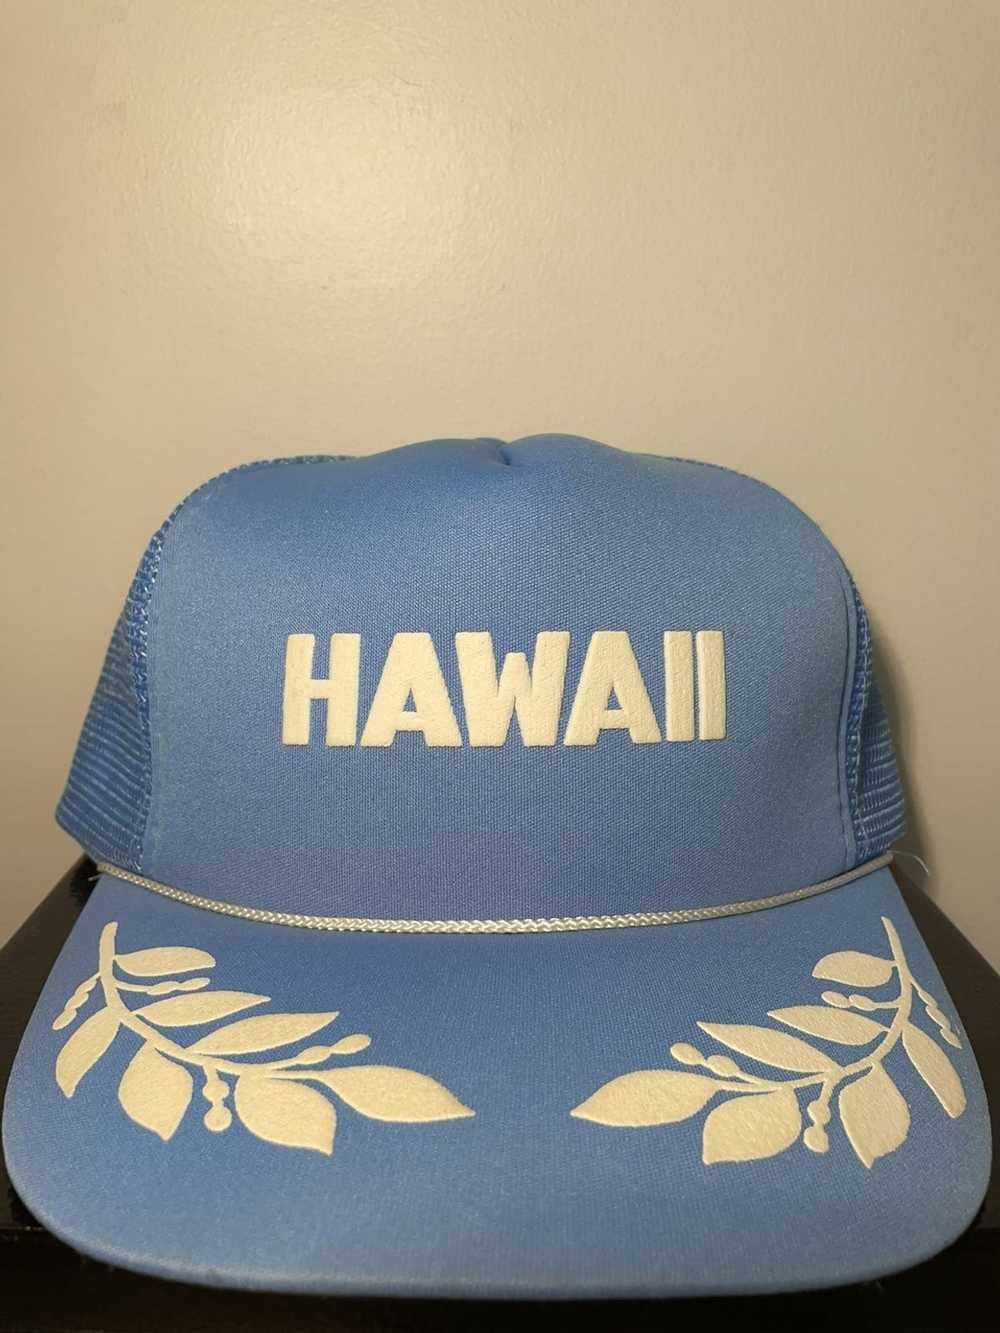 Vintage Vintage Hawaii Trucker Hat - image 1